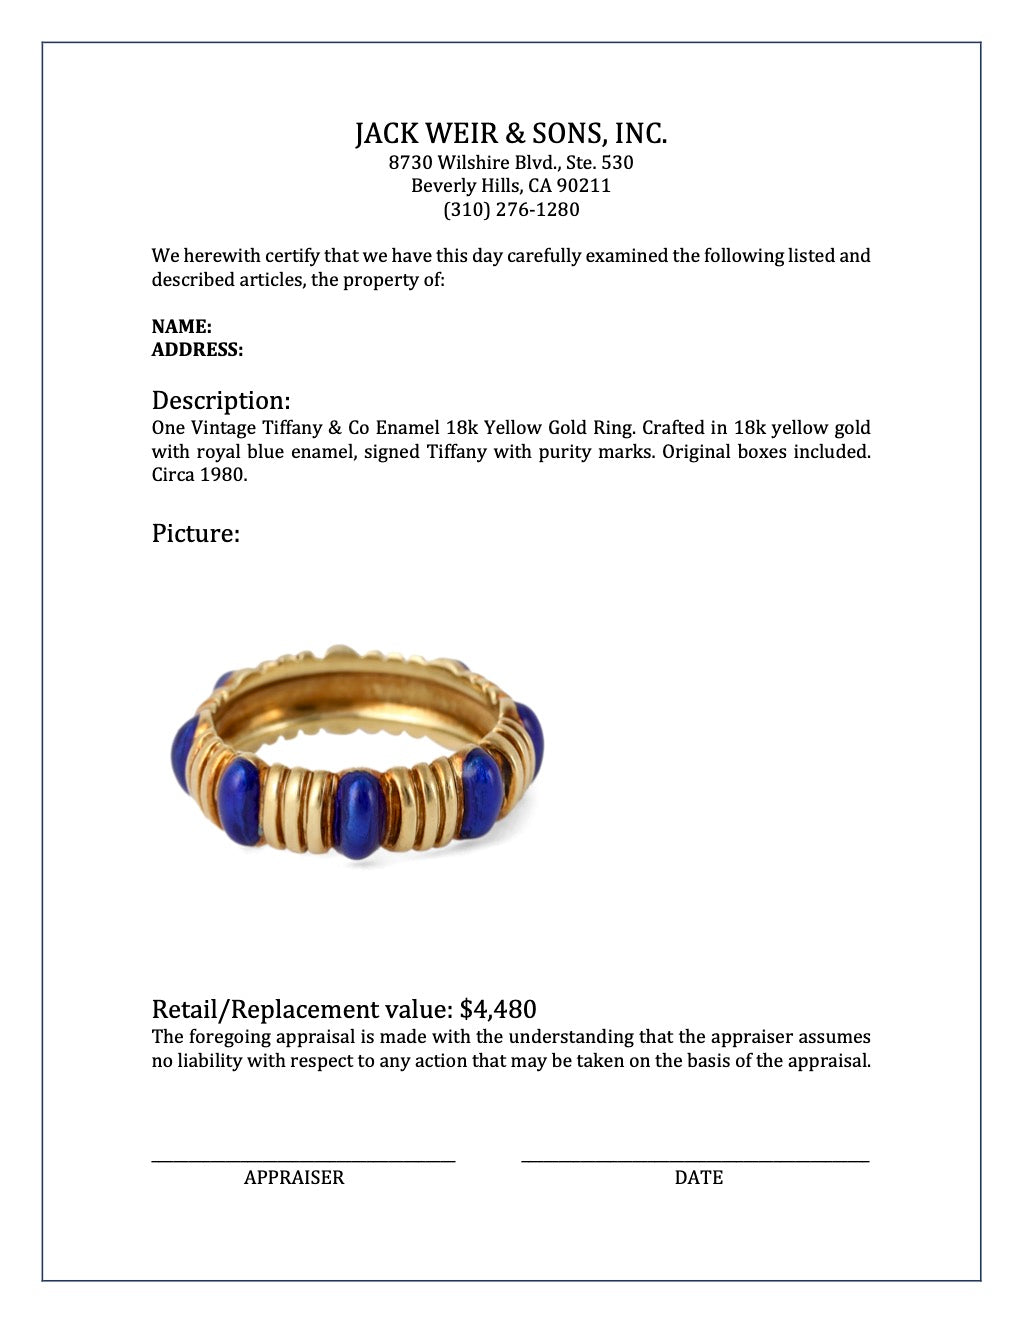 Tiffany Co 18K Gold Platinum Fancy Intense Yellow Diamond Bezet Engagement  Ring